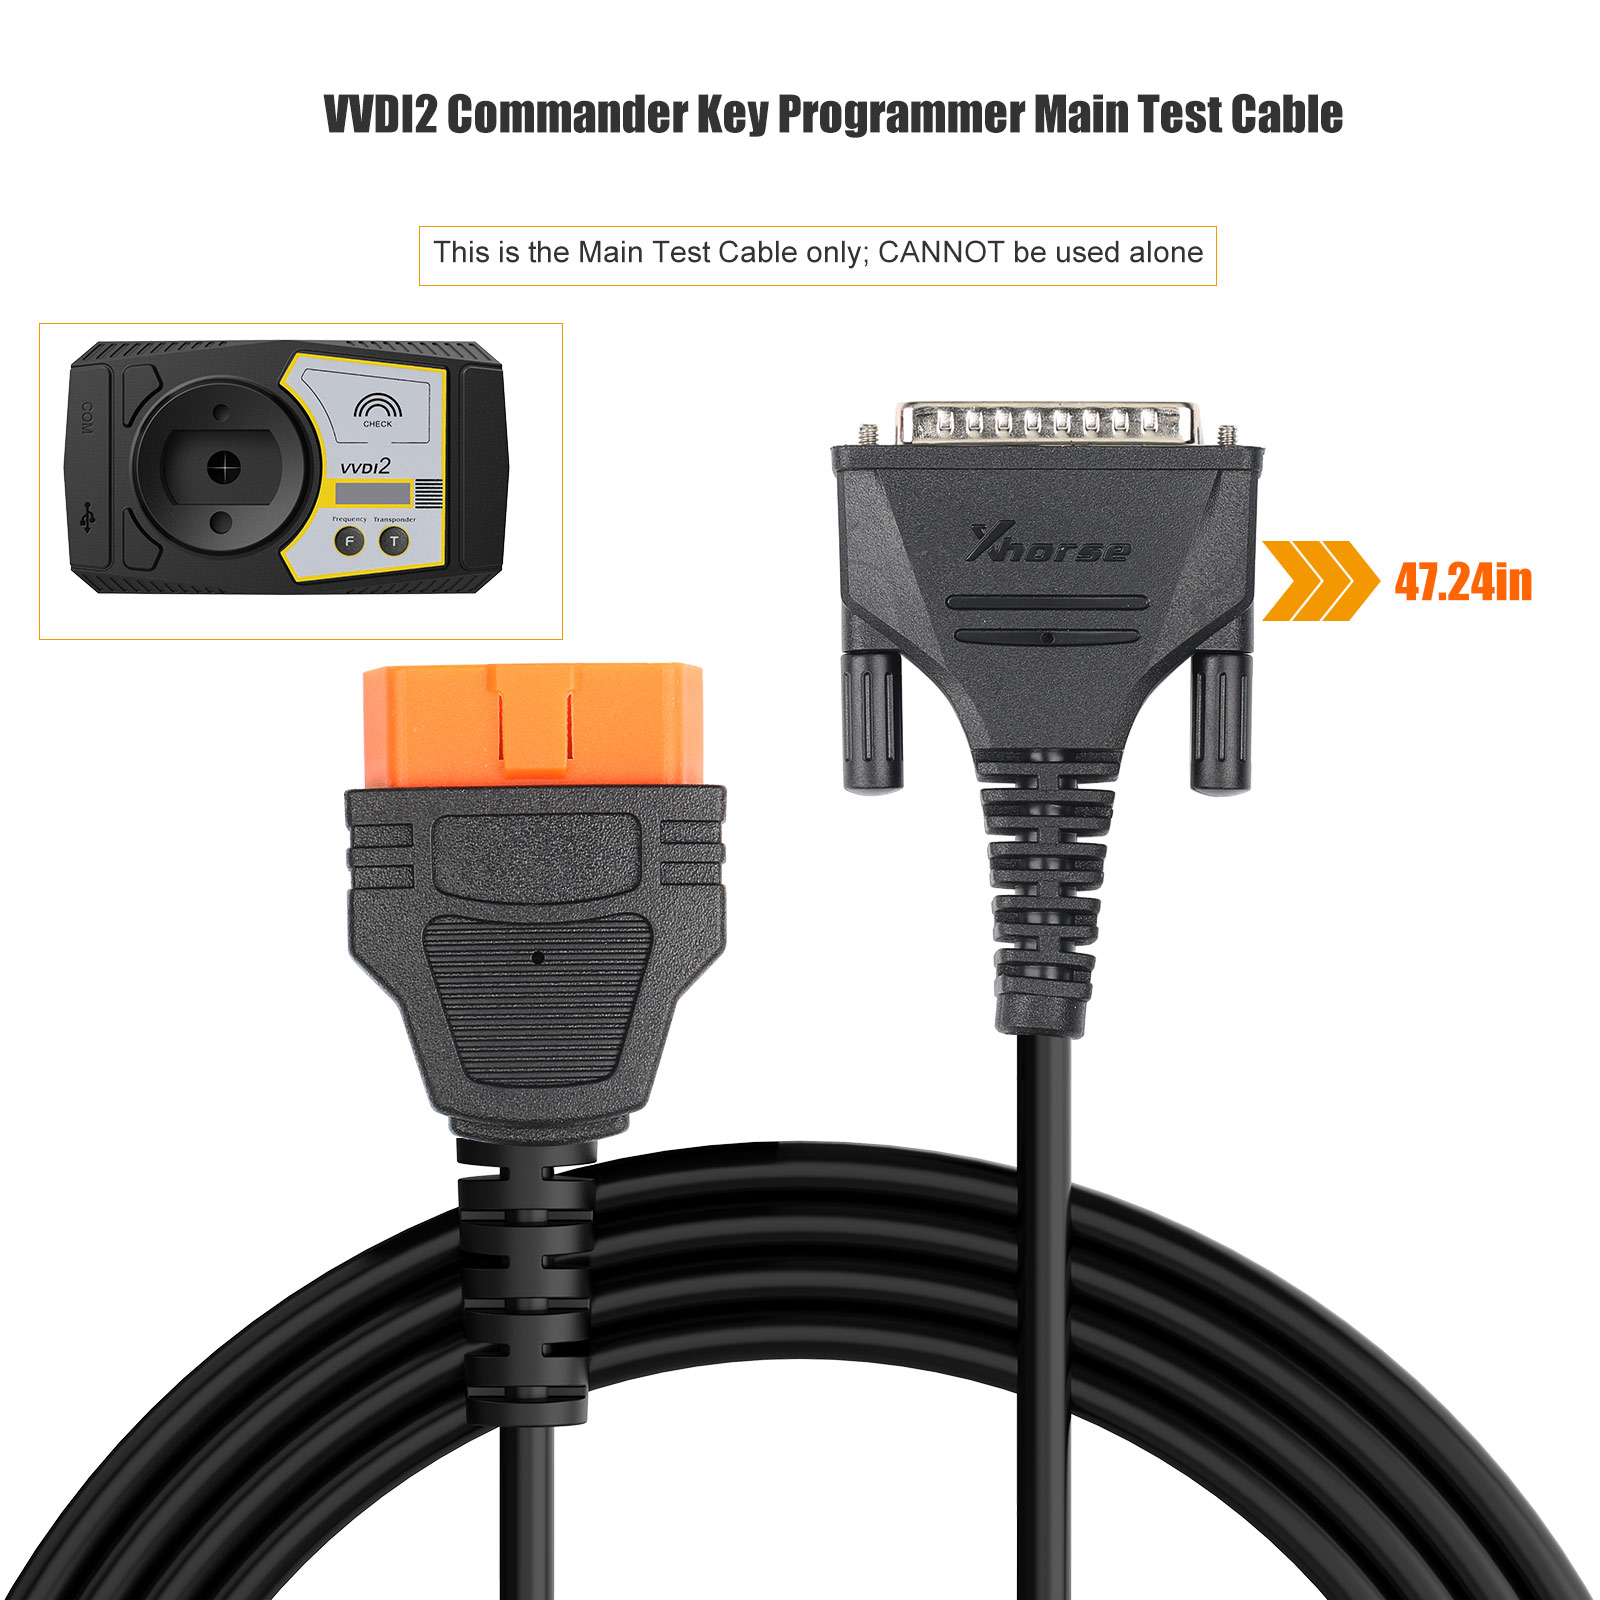 VVDI2 Main Test Cable for XHORSE VVDI 2 Commander Key Programmer